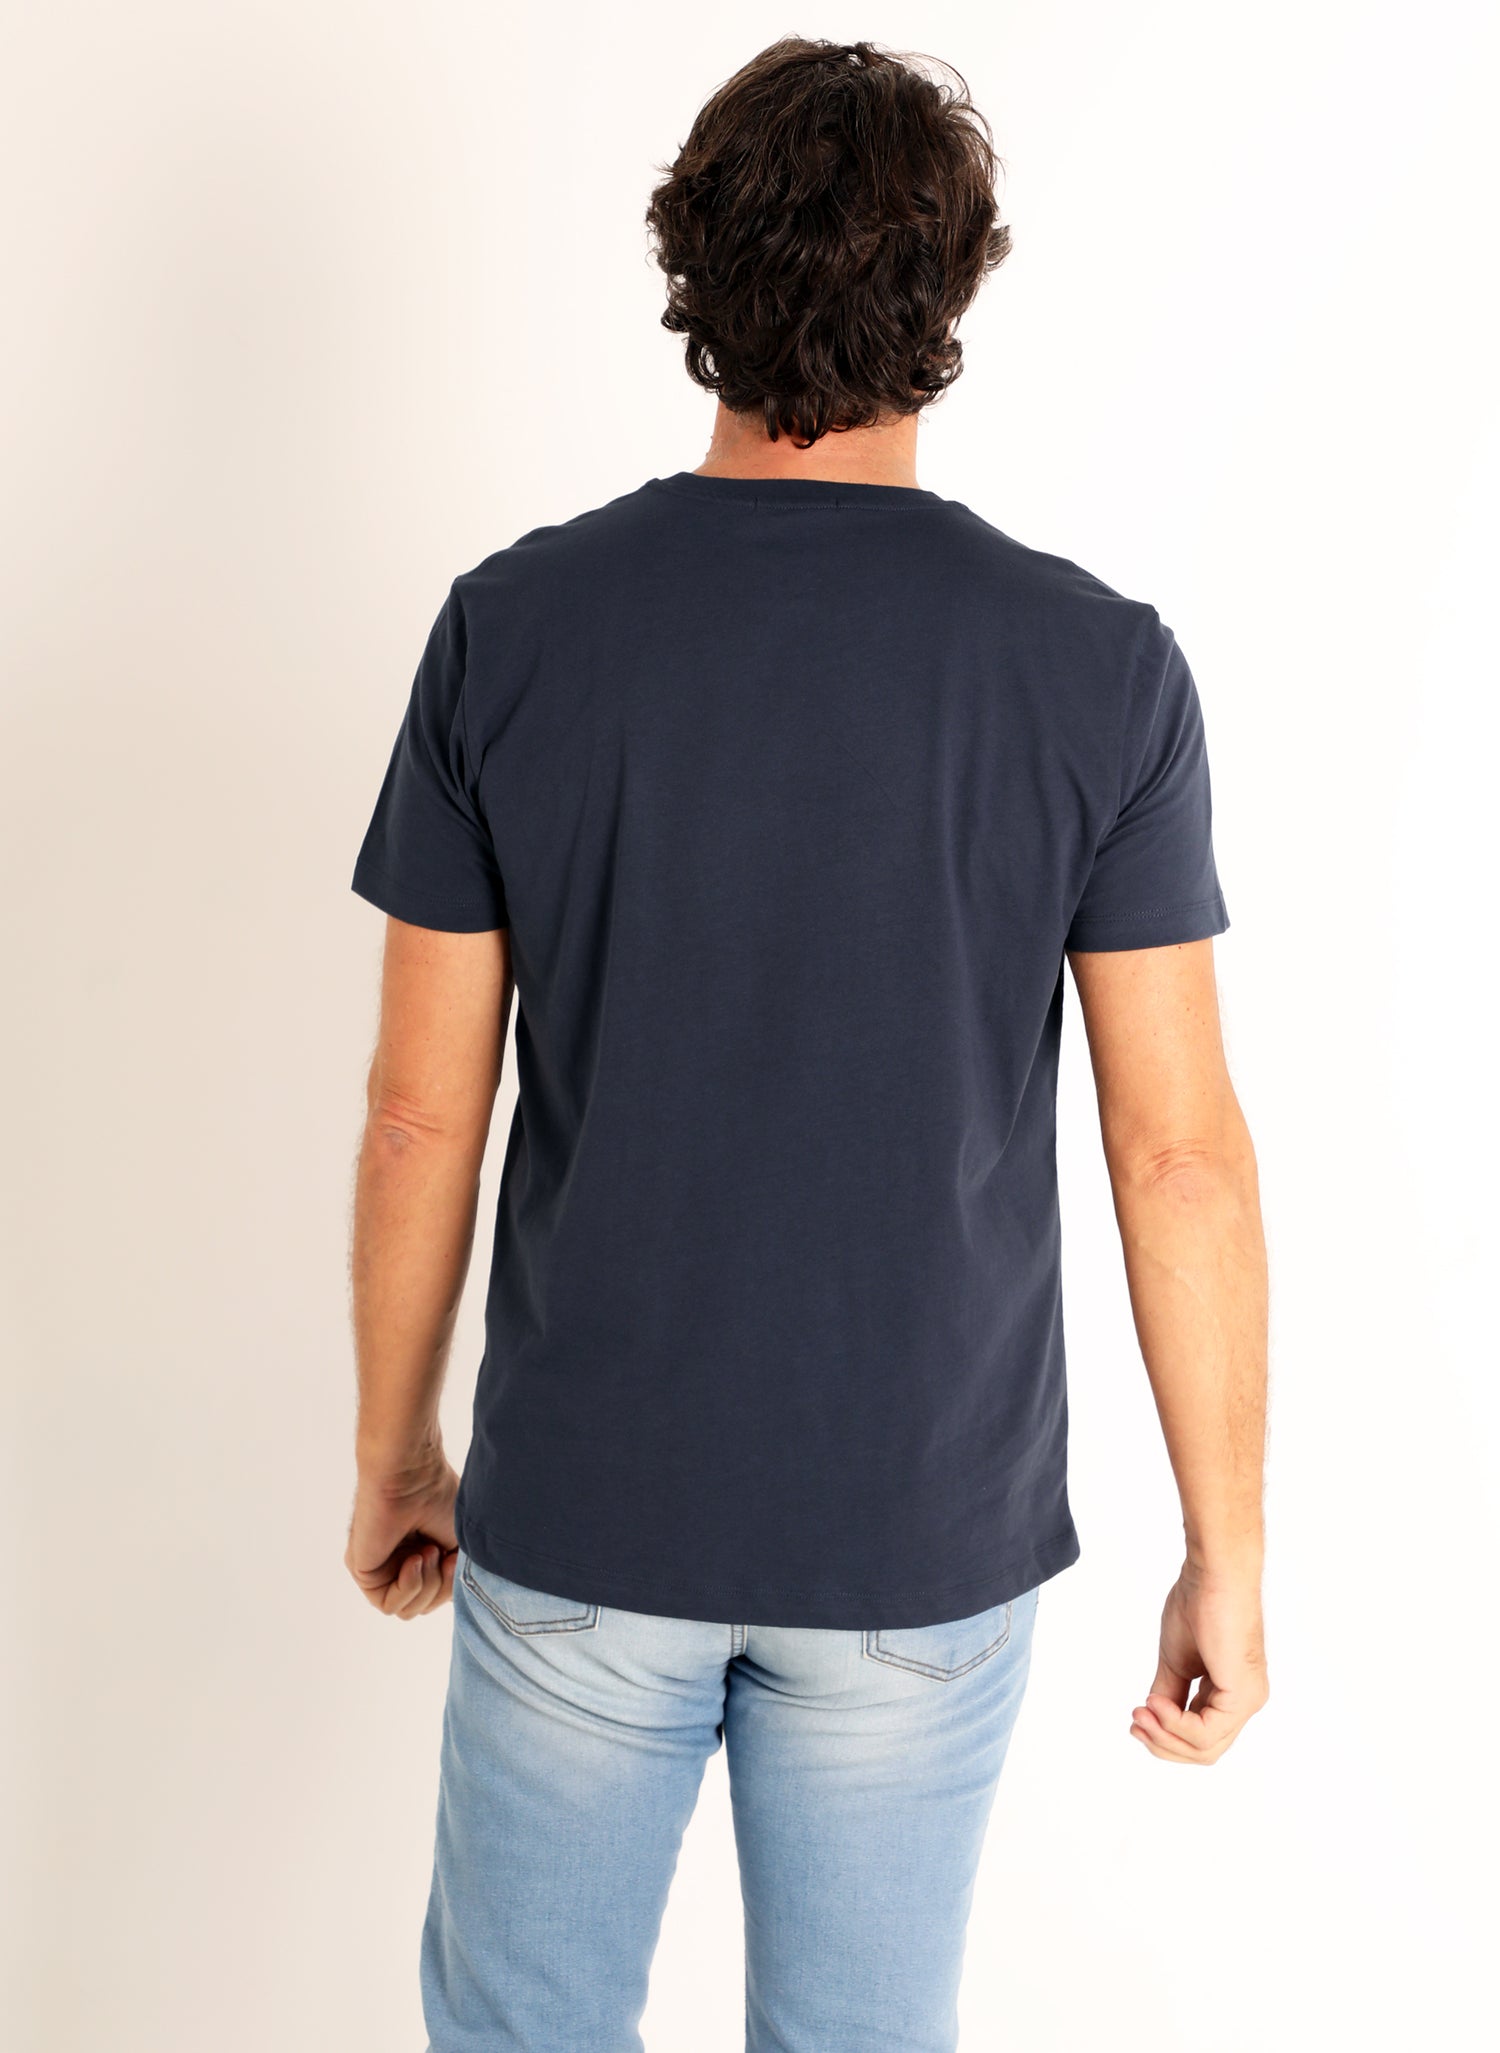 Blas de Lezo T-Shirt Blau Spanien